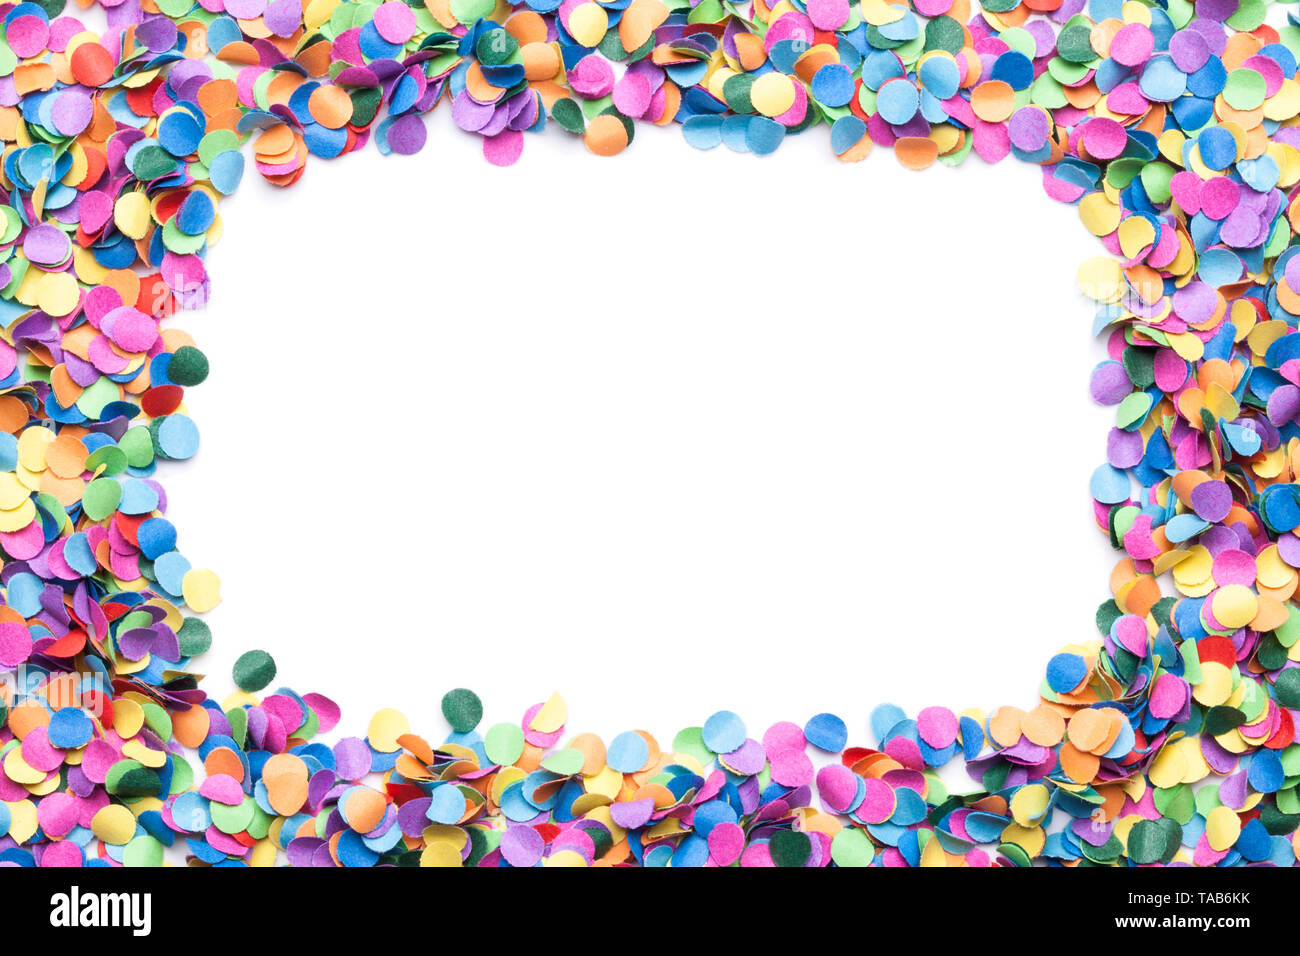 colorful confetti on white background Stock Photo